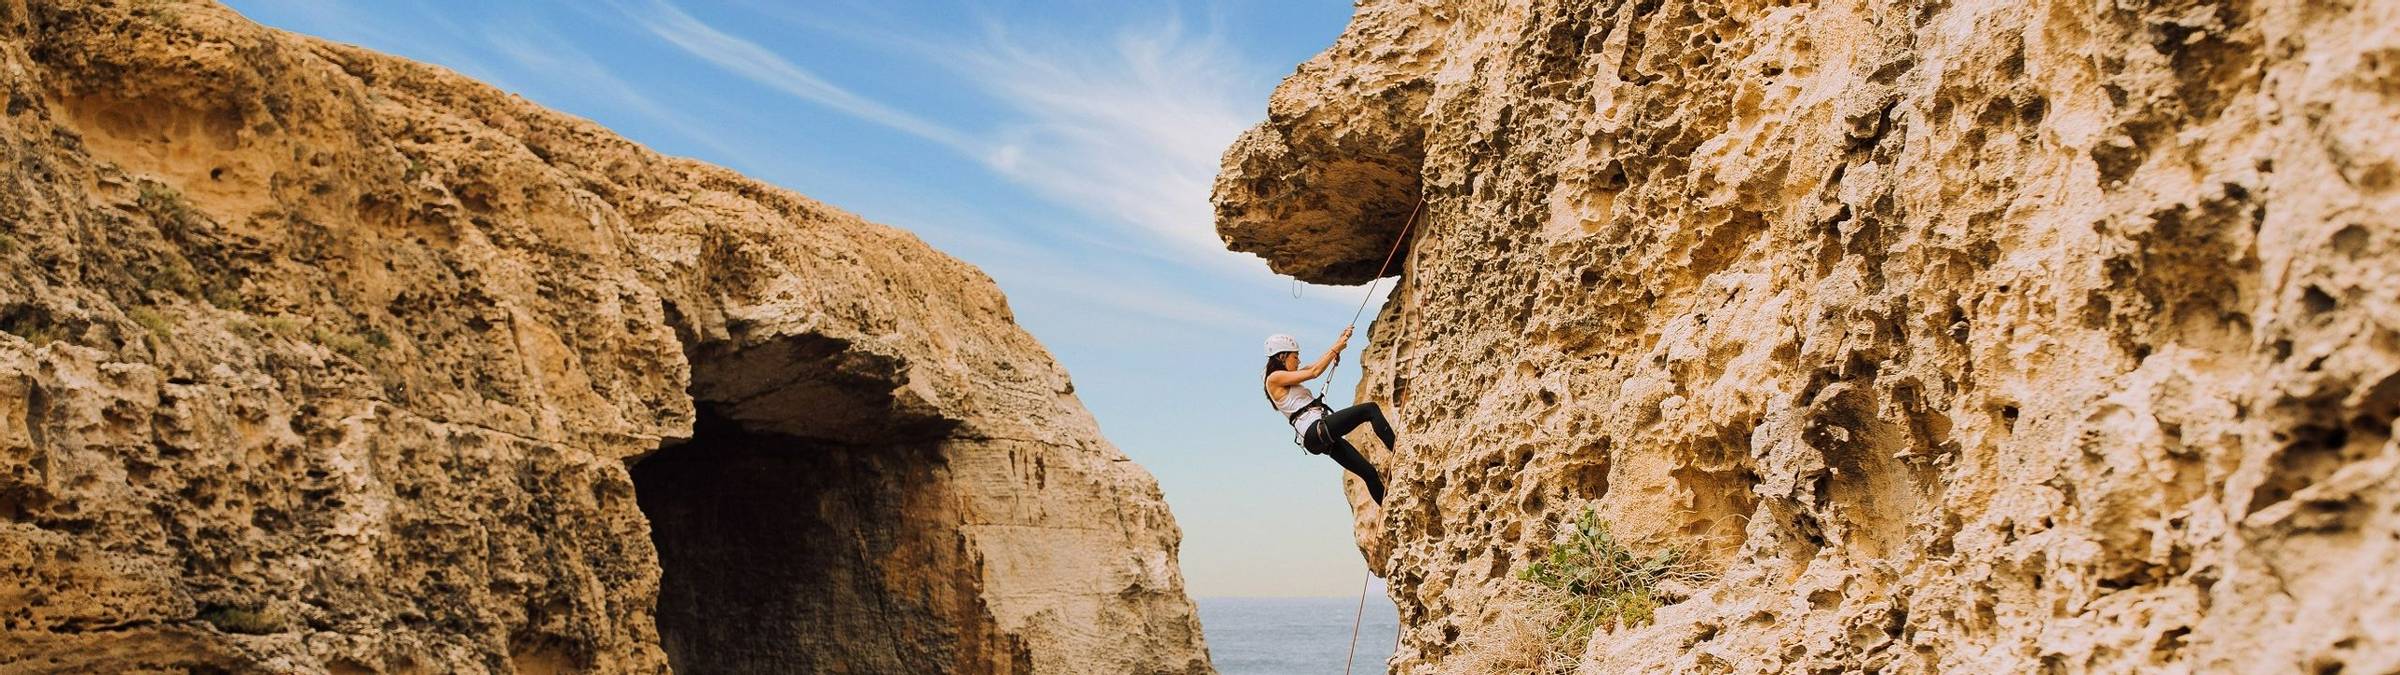 Young Woman Climbing Cliffs Of Gozo